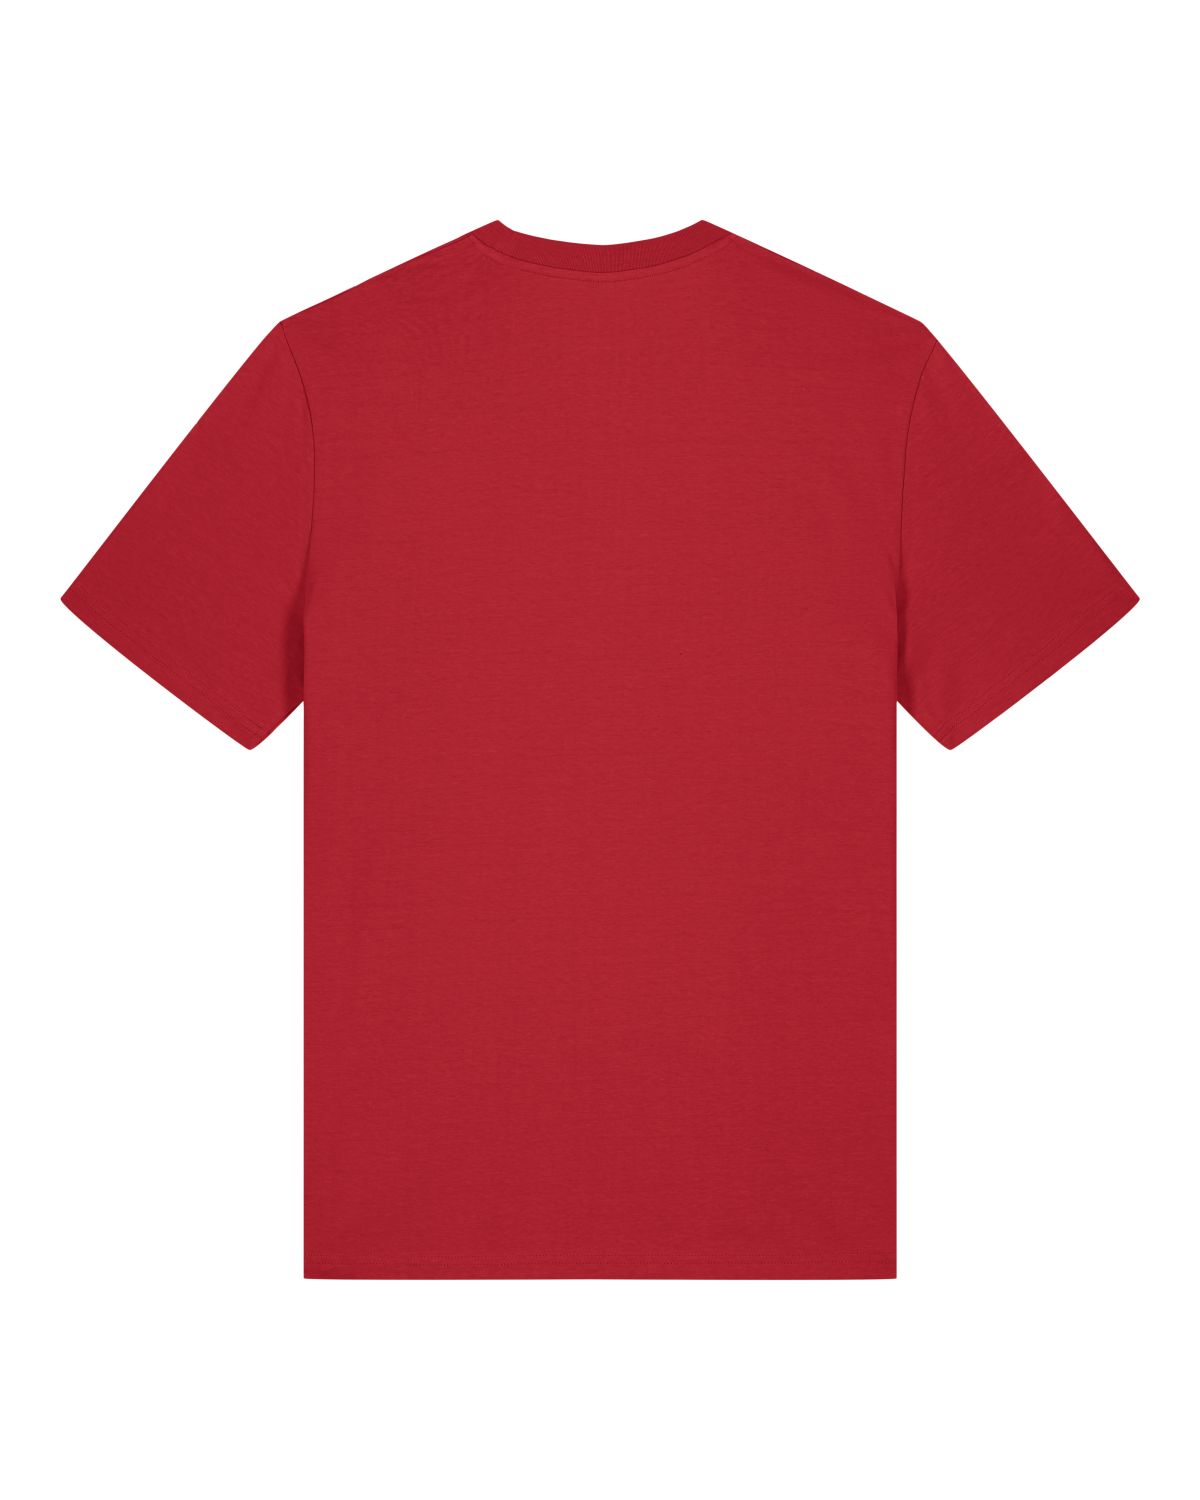 UU Unisex T-shirt - red